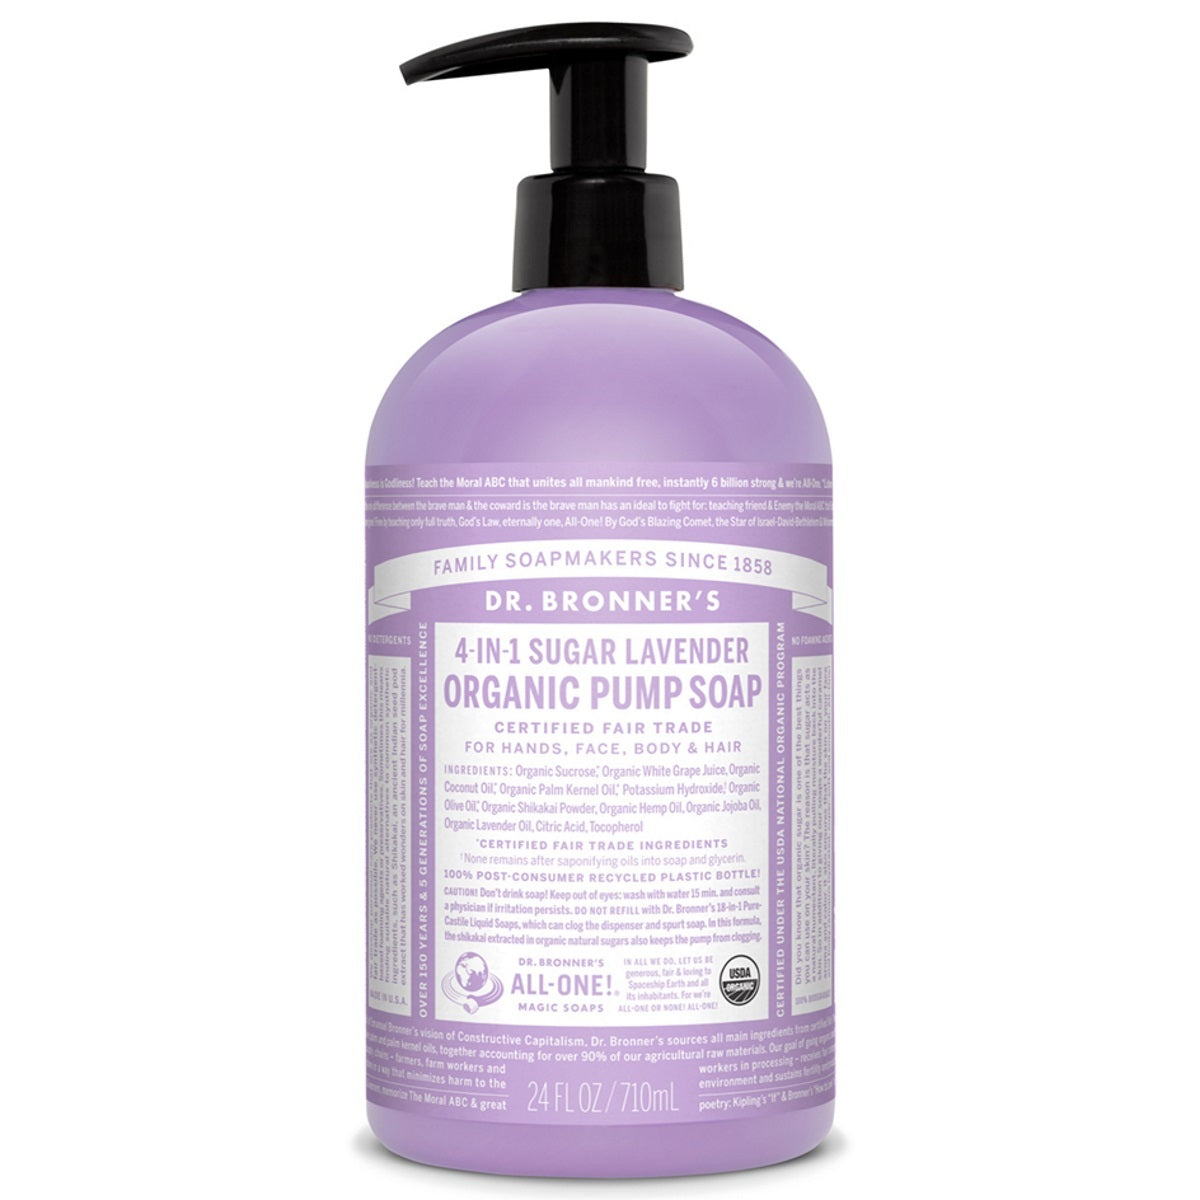 Primary image of Sugar Lavender Organic Pump Soap